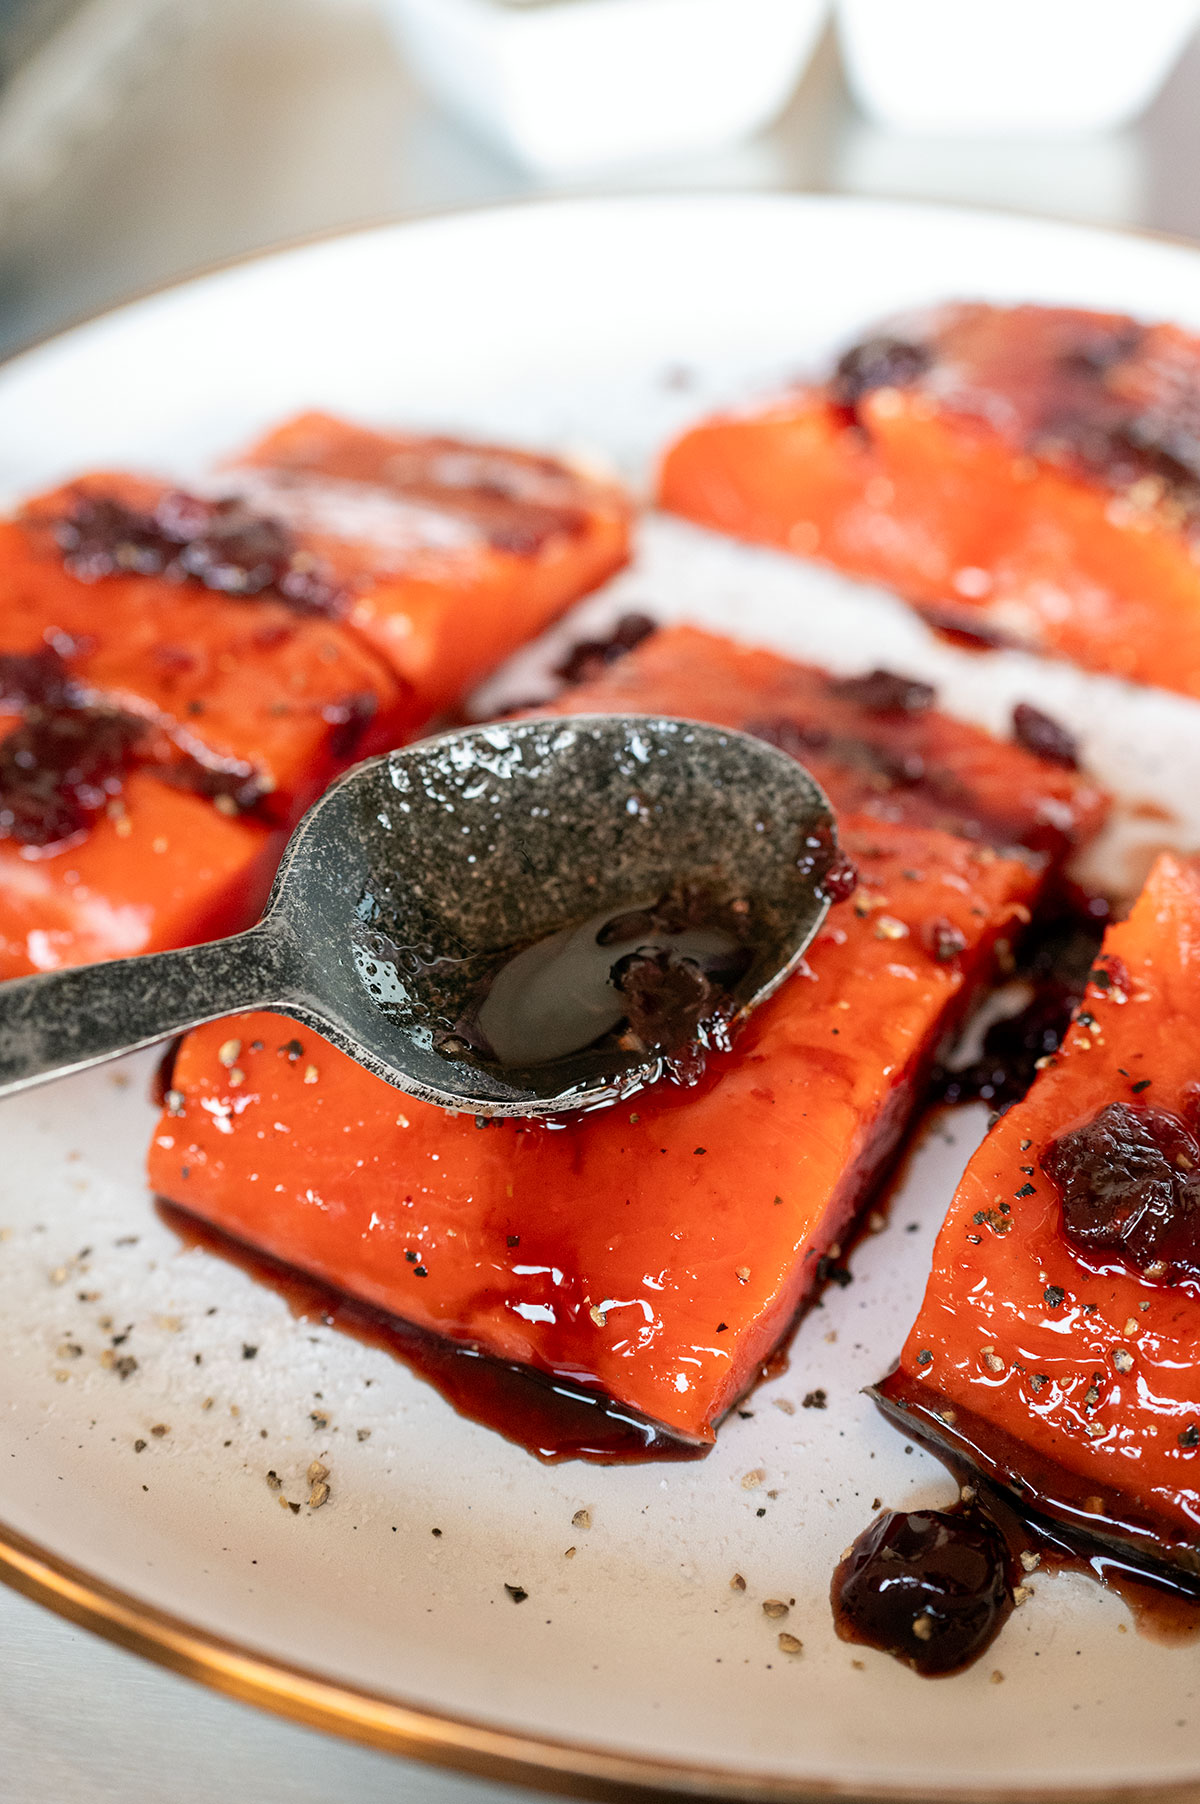 Spooning cherry glaze on salmon.